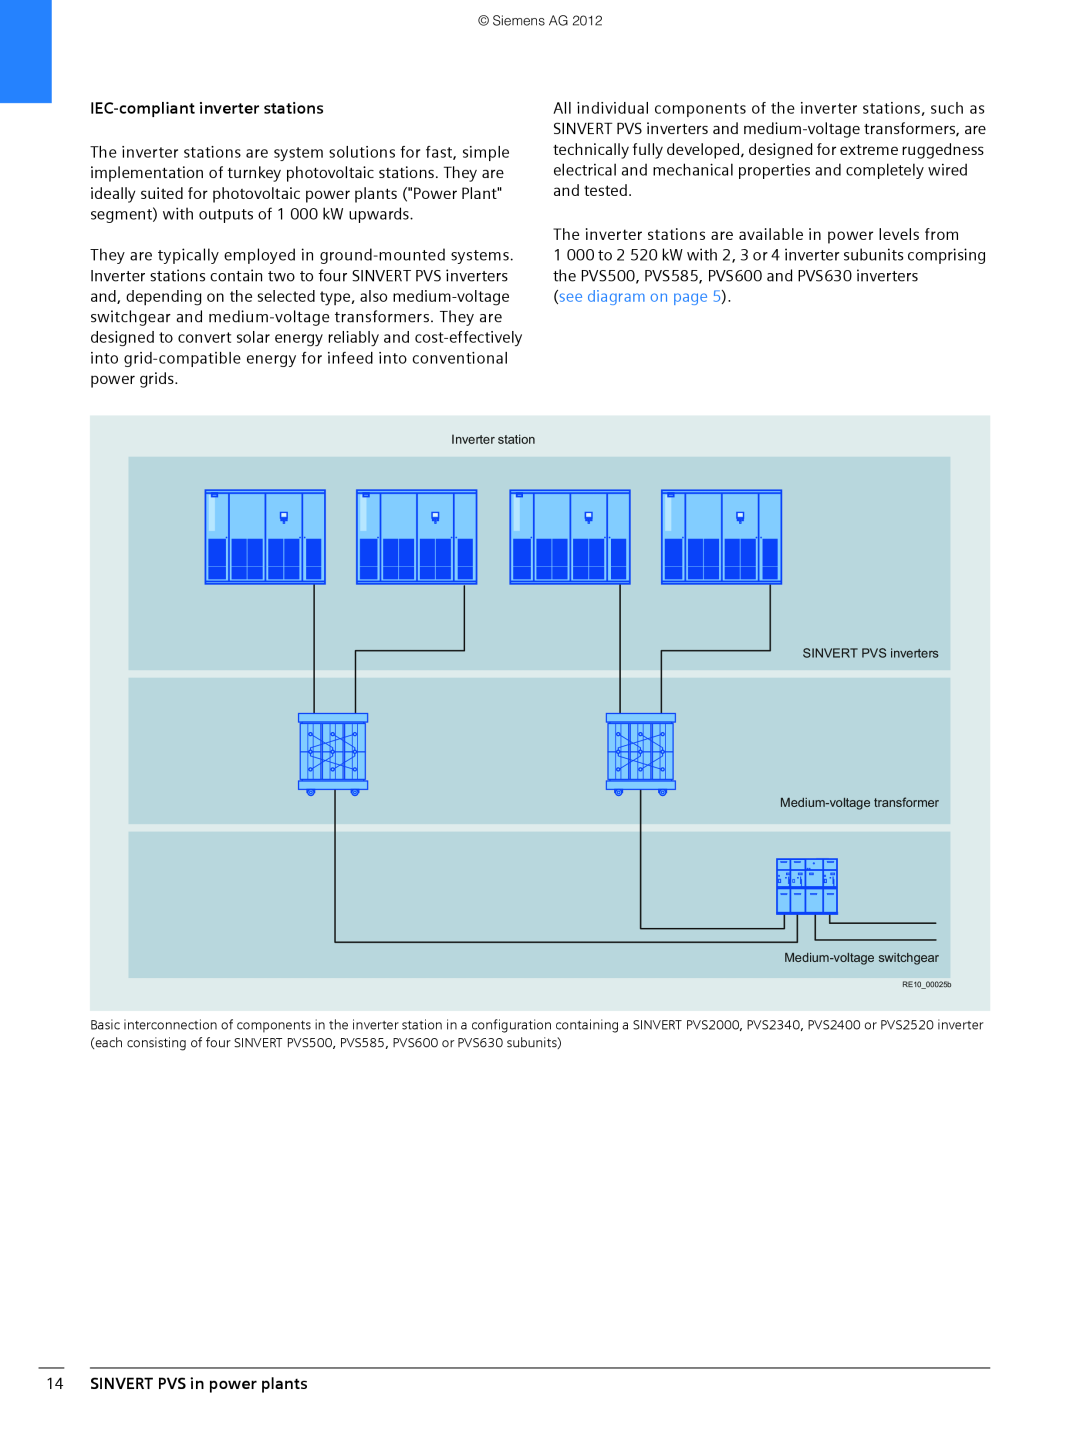 Siemens 600 brochure IEC-compliantinverter stations, see diagram on page, 14SINVERT PVS in power plants 